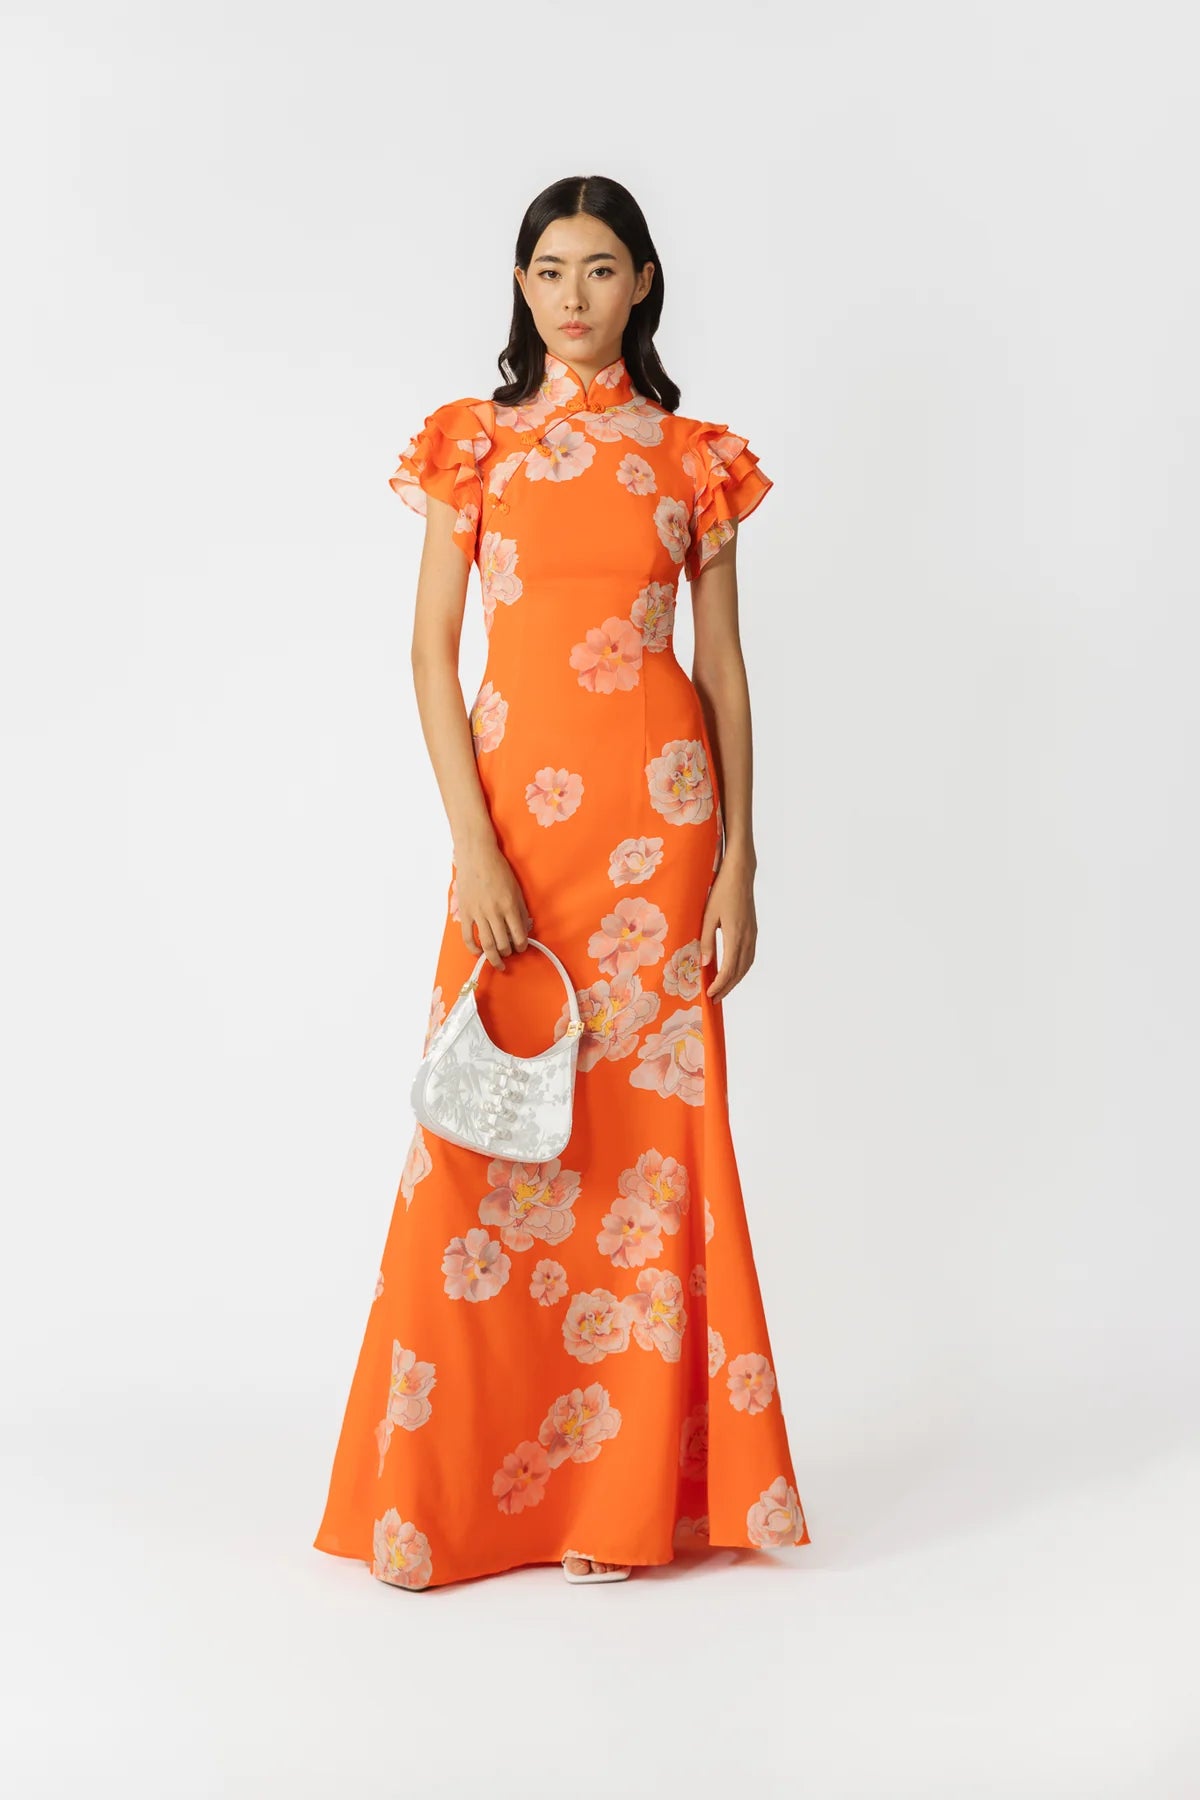 Sylvie Floral Dress in Orange Multi